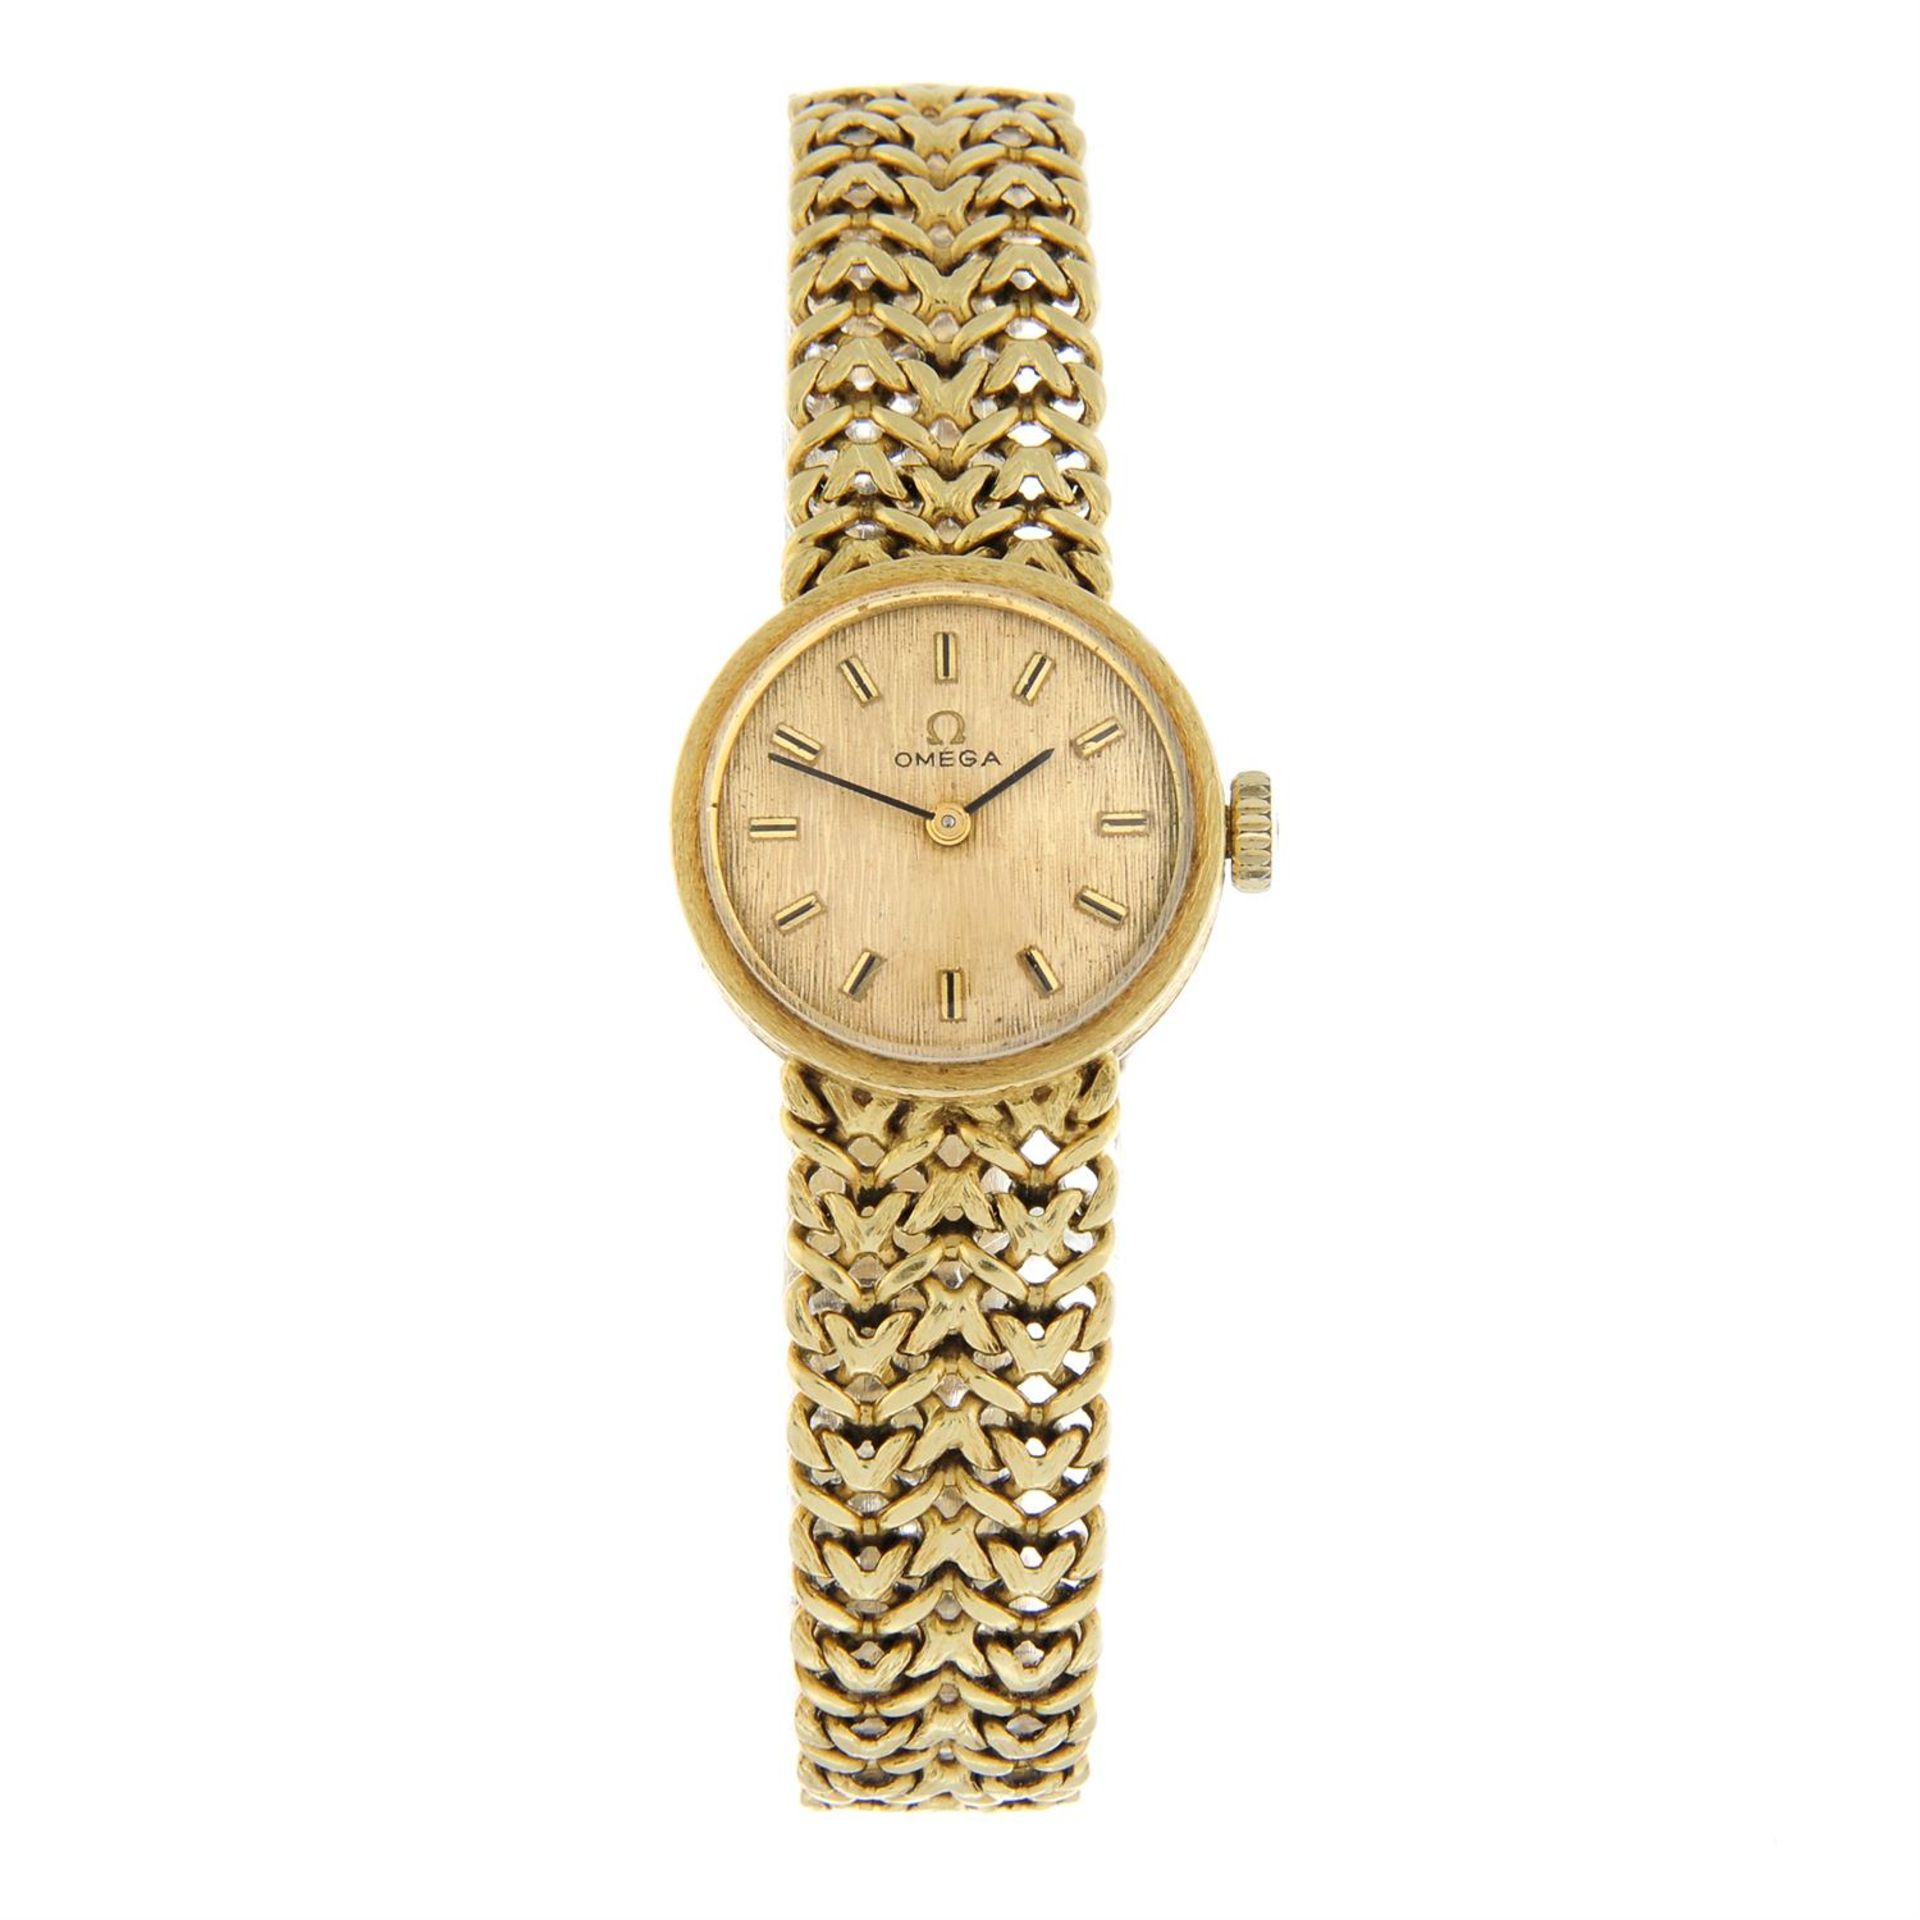 OMEGA - an 18ct yellow gold bracelet watch, 21mm.